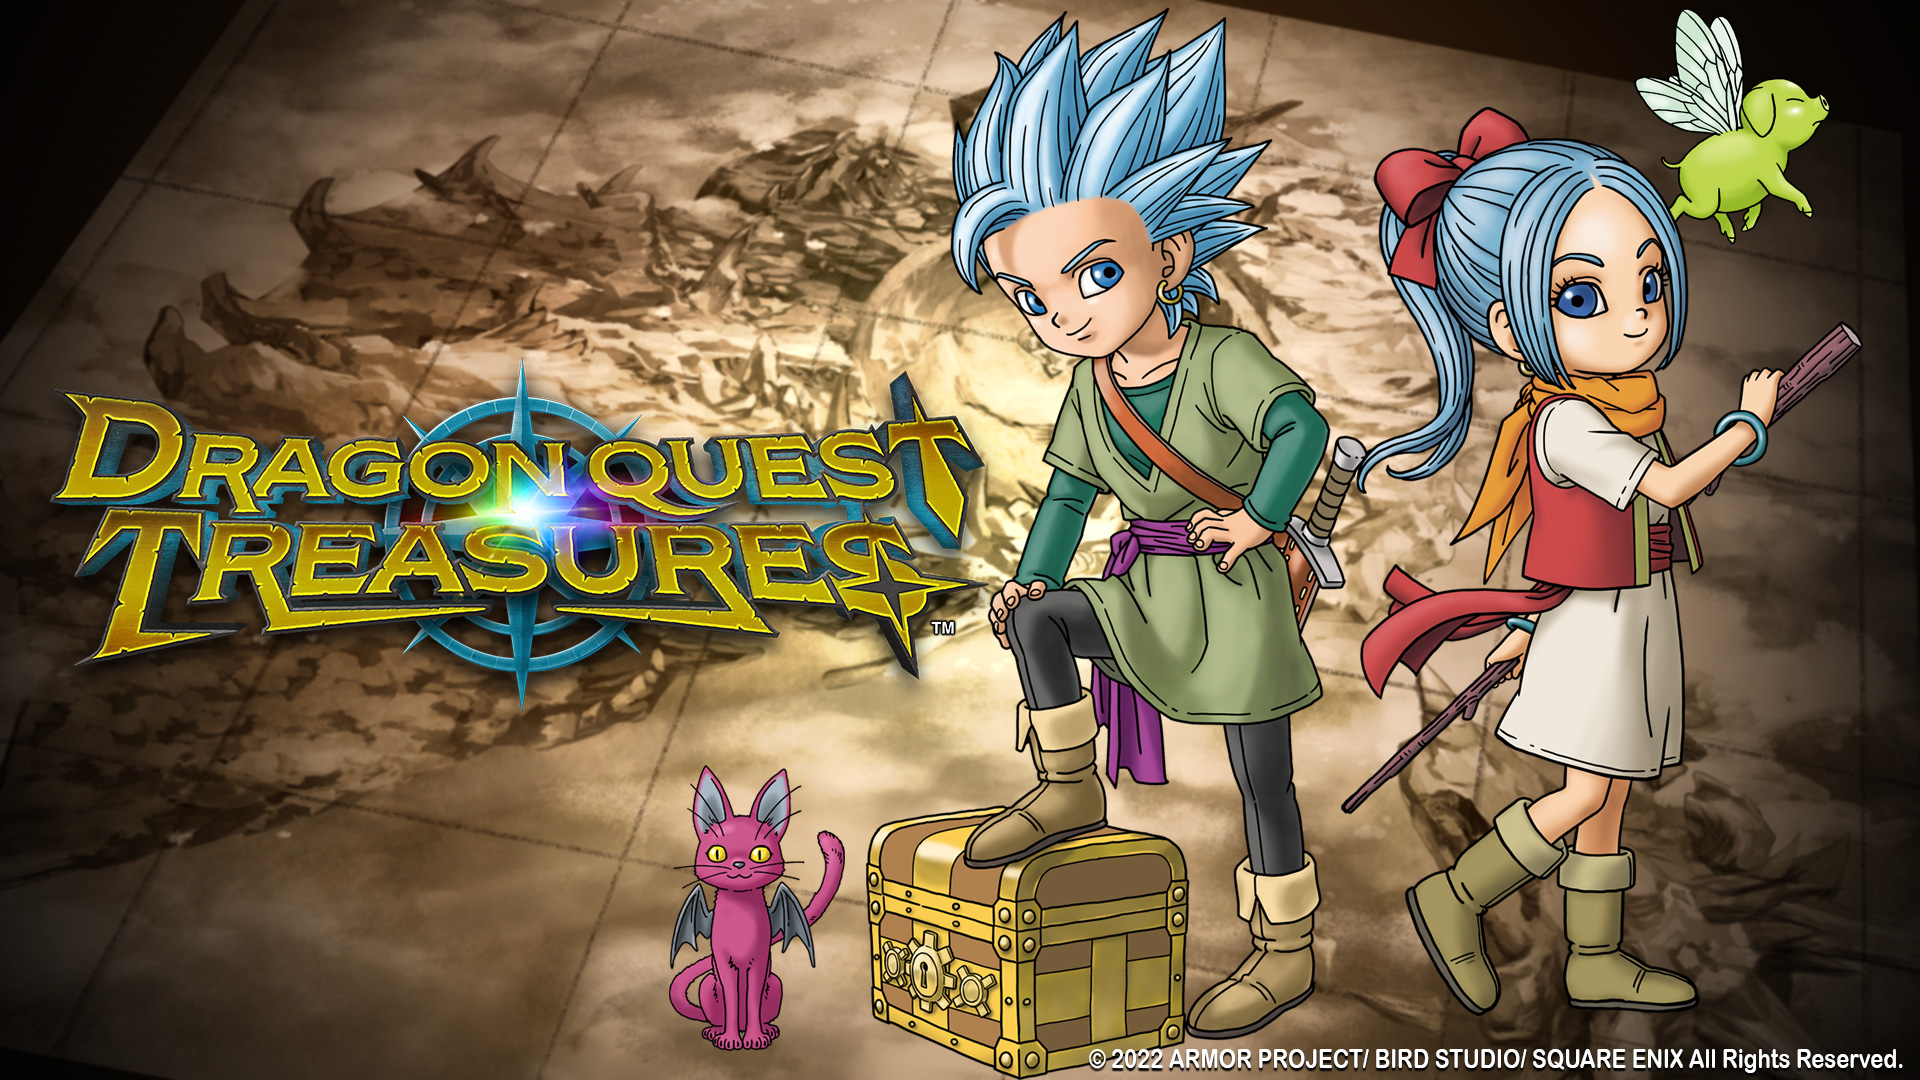 Recruit monsters and hunt treasures in Dragon Quest Treasures